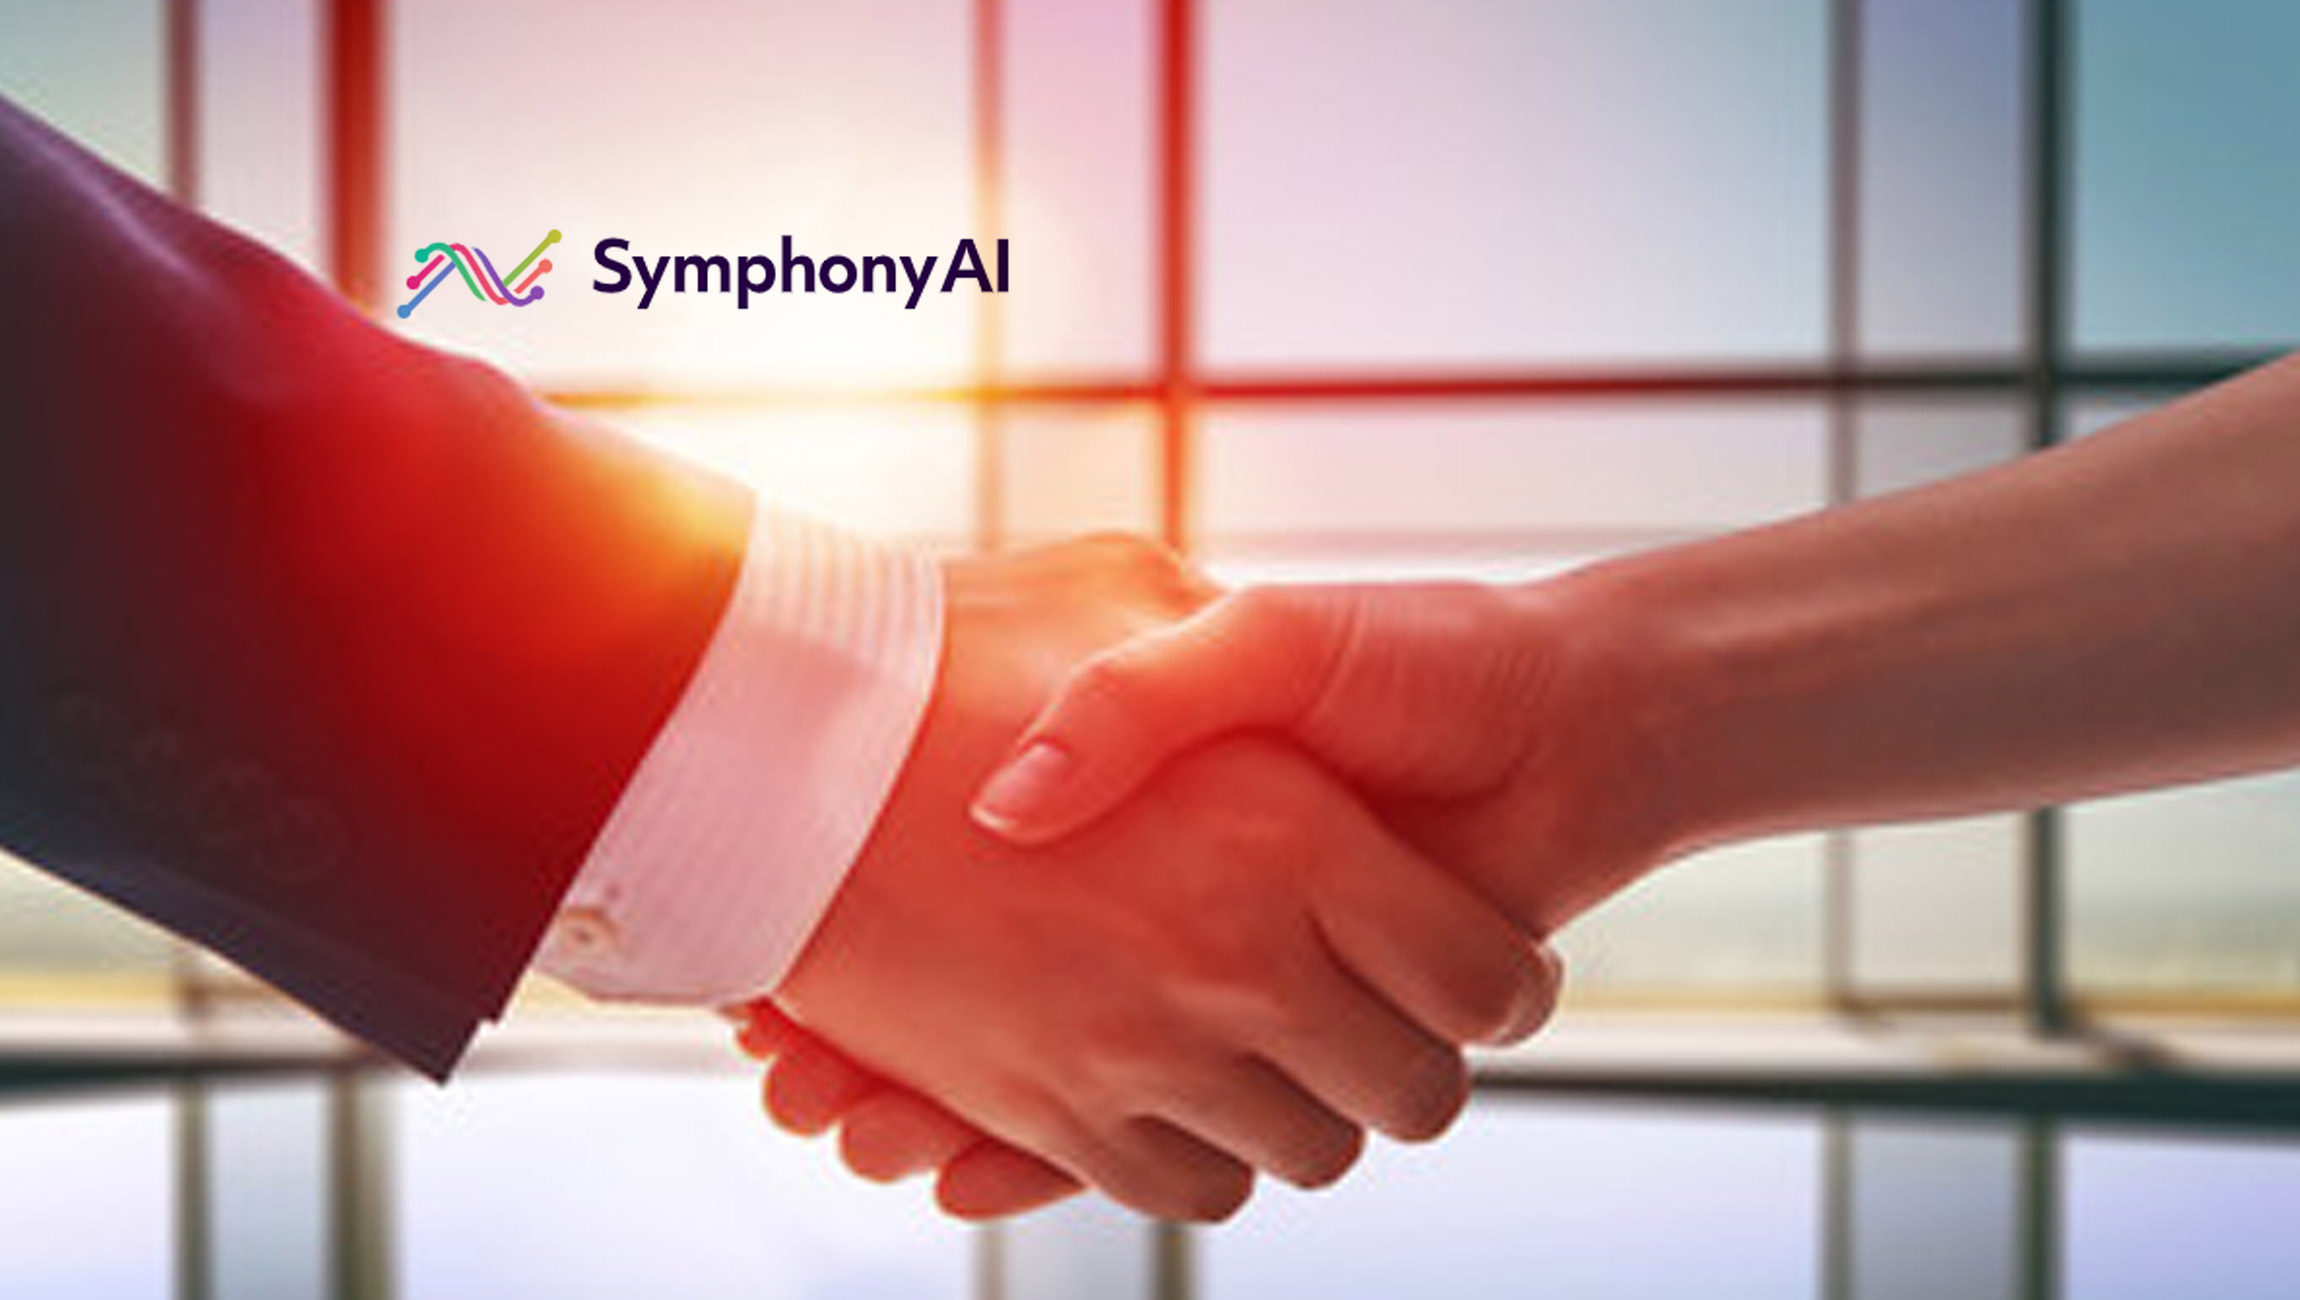 SymphonyAI Announces Enterprise AI Research Partnership with Semmelweis University Heart and Vascular Center to Predict Healthcare Outcomes